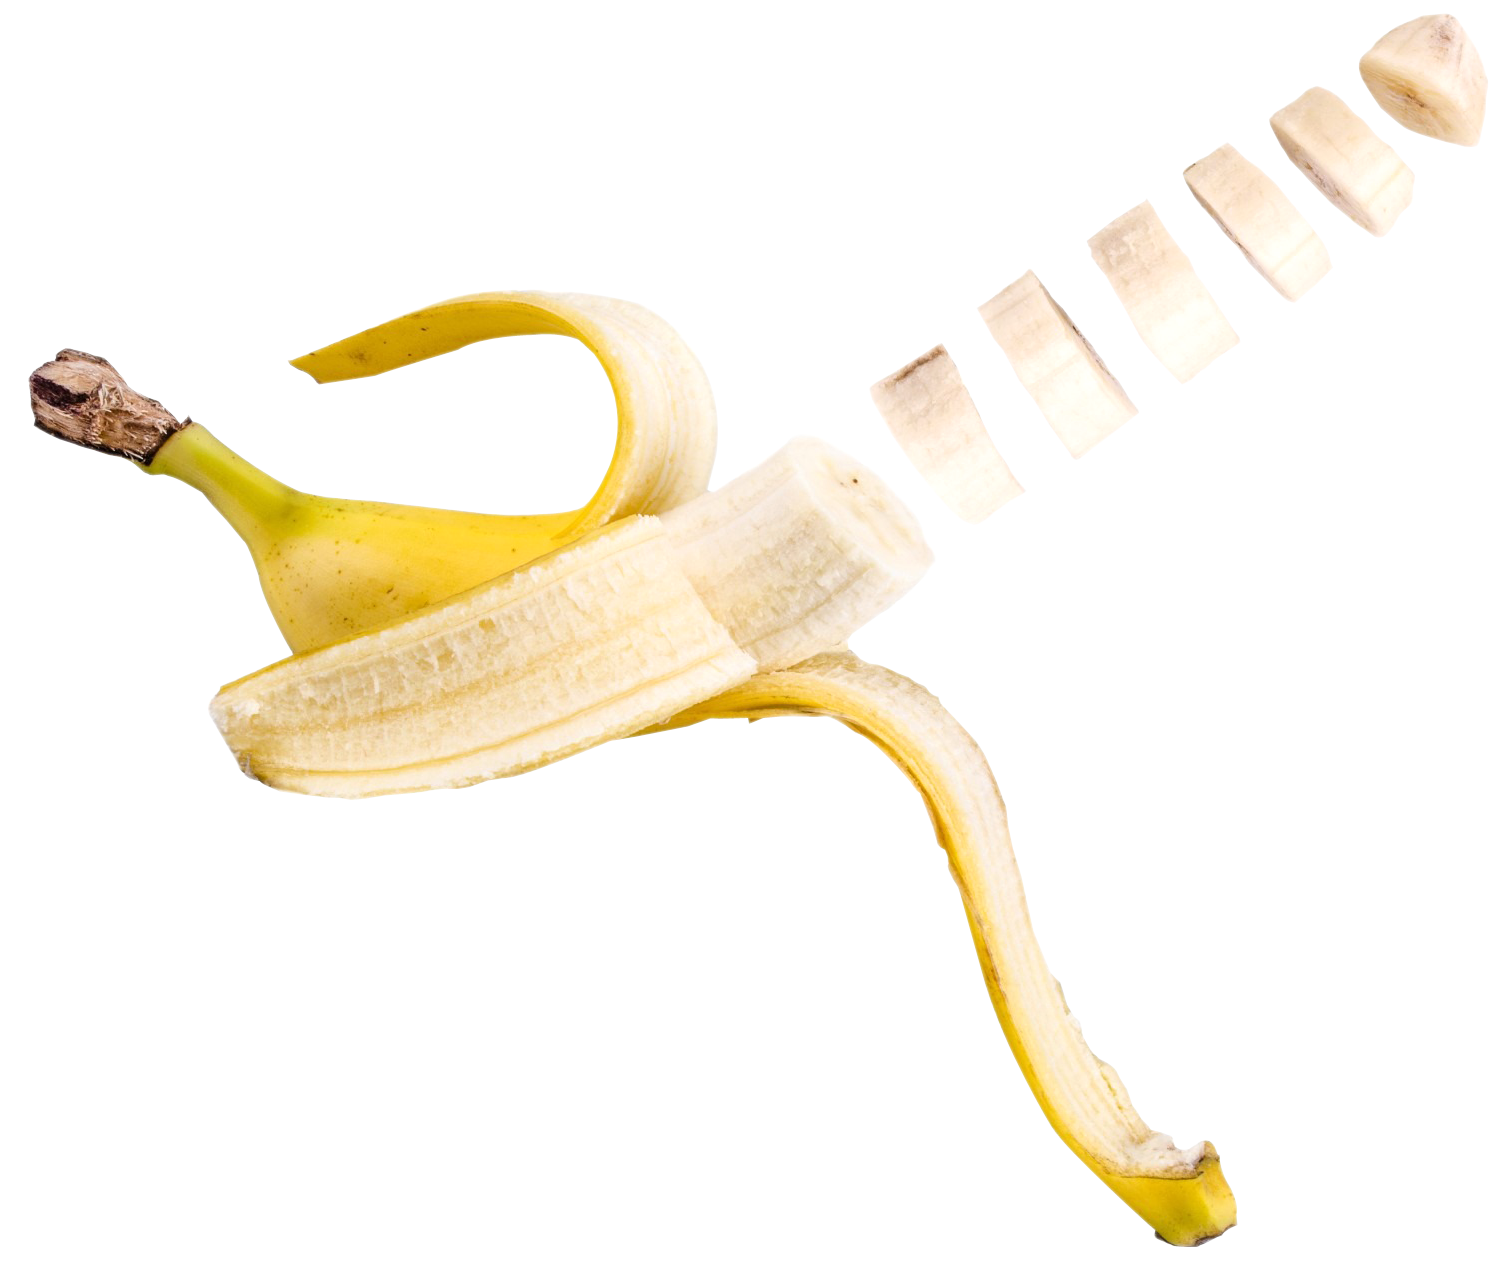 Floating Banana Slices PNG